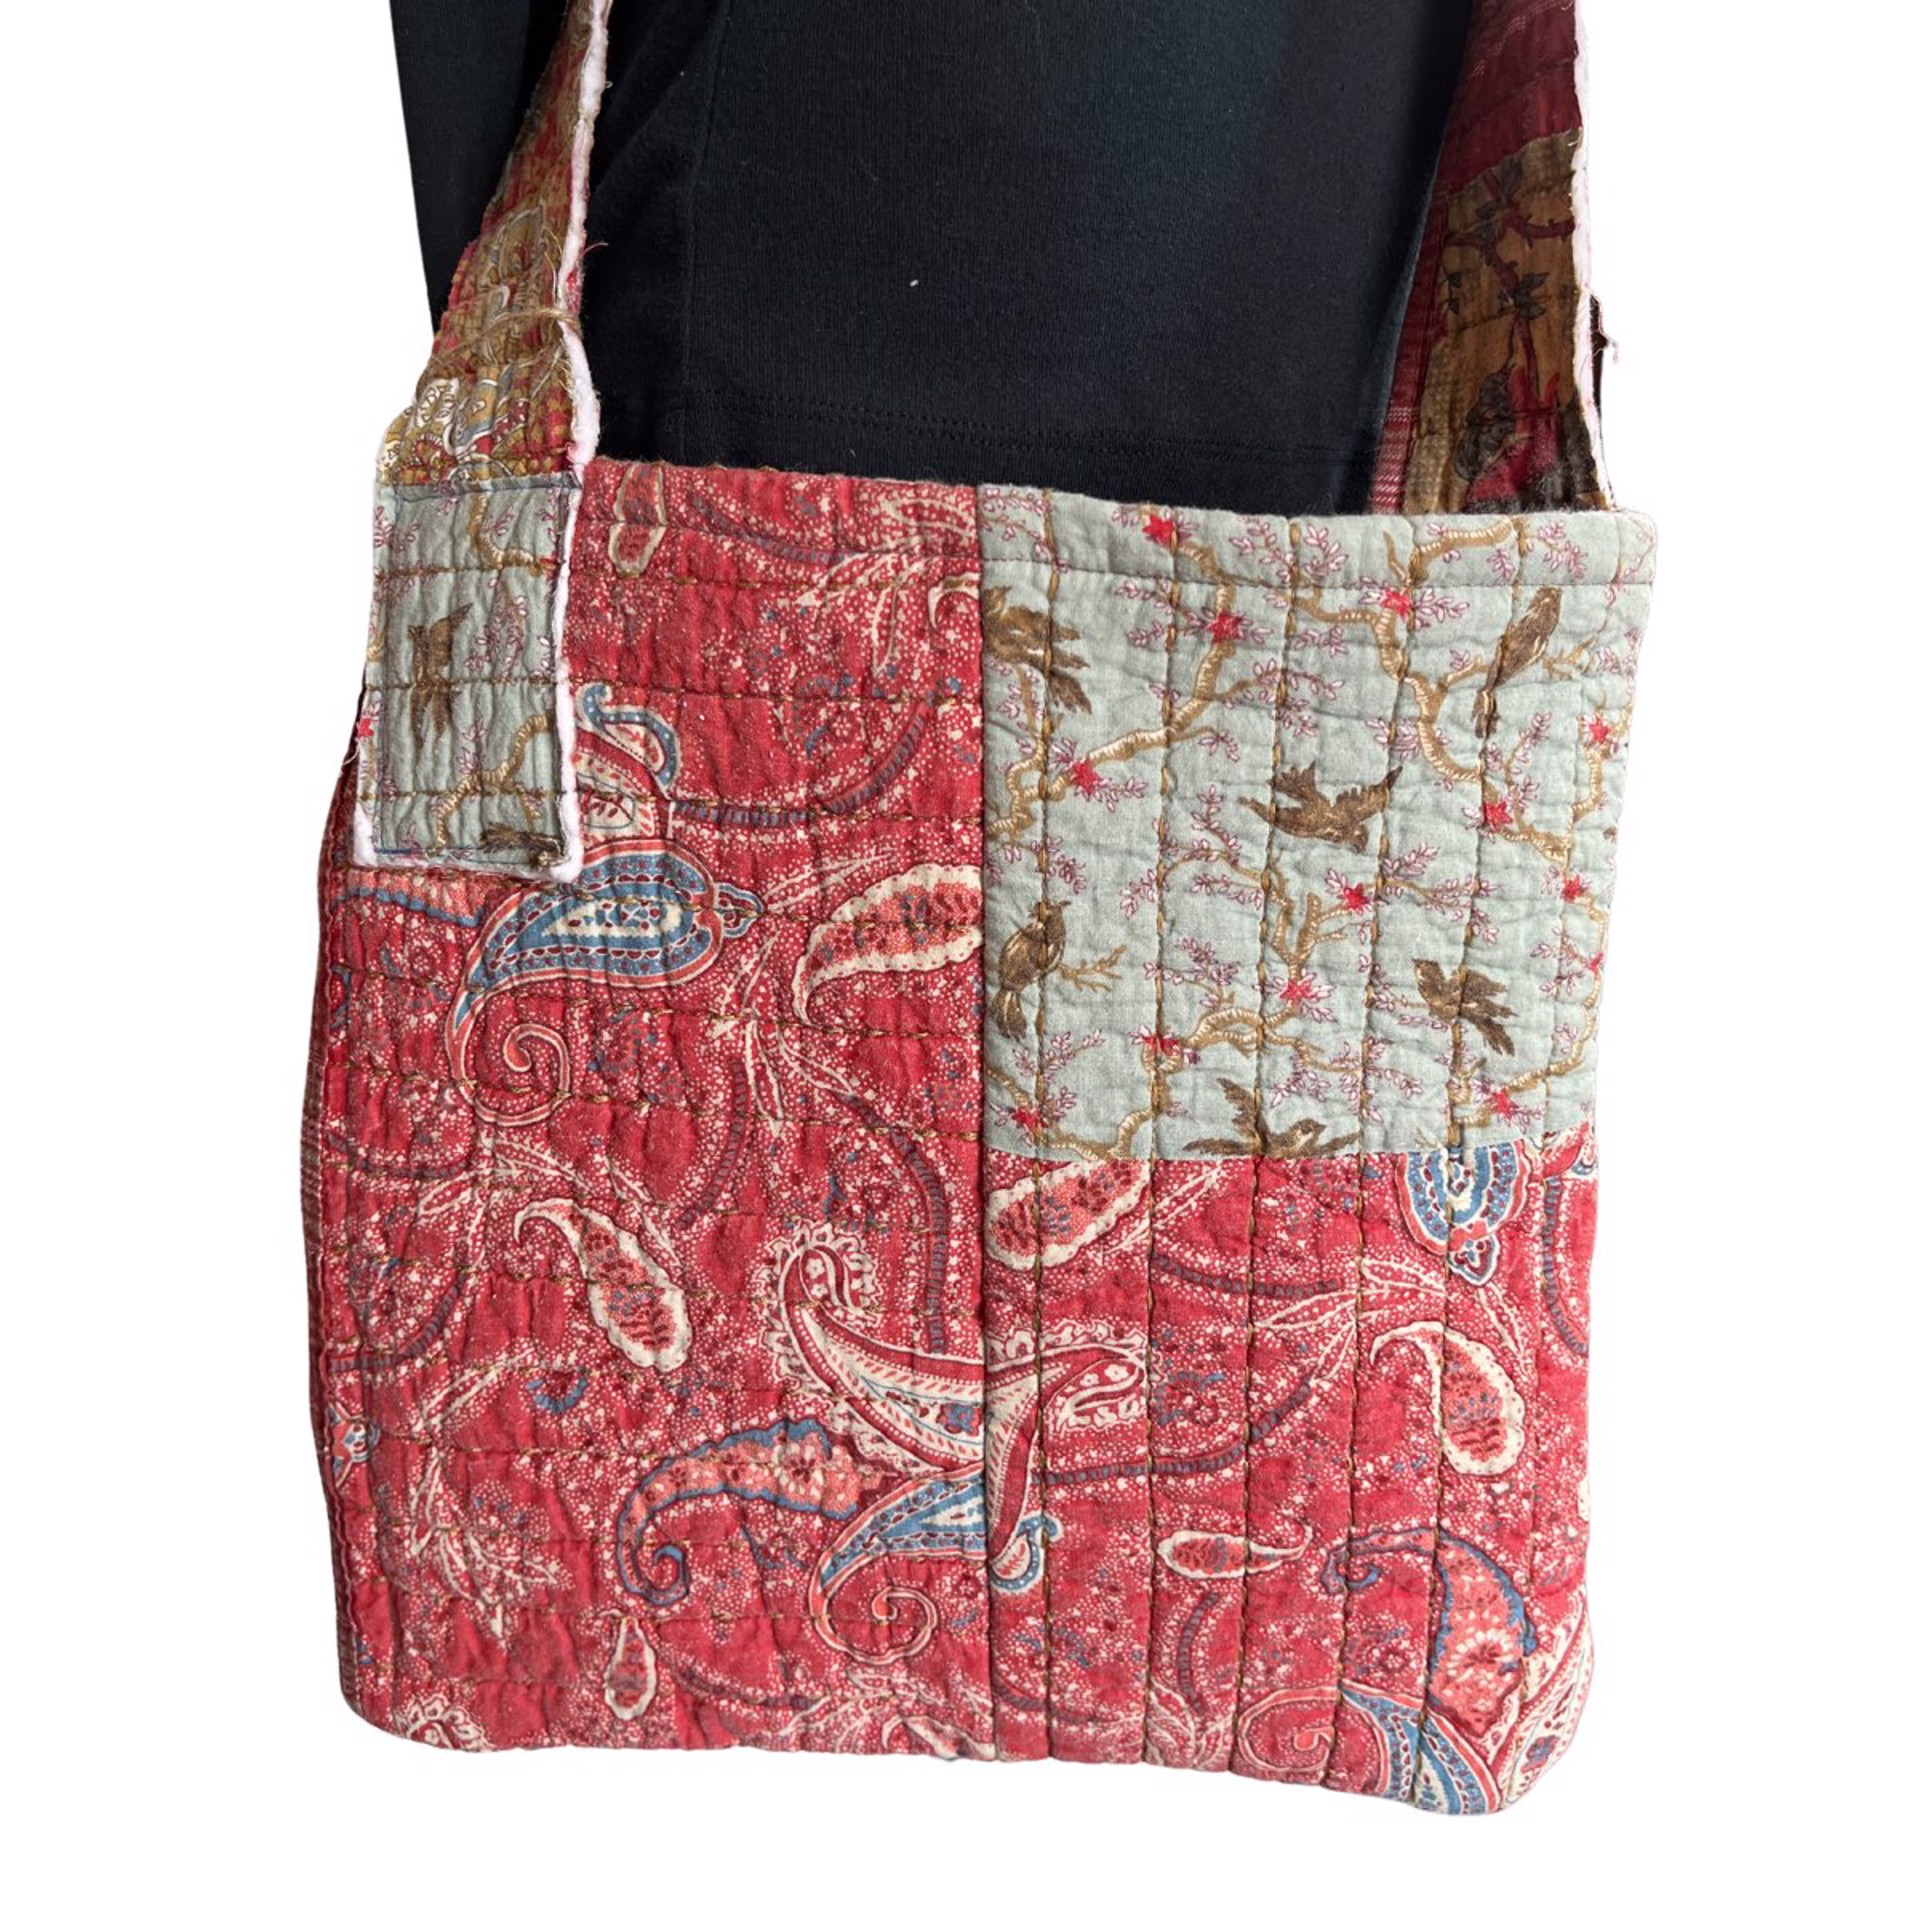 Quilted Shoulder Bag by Twyla Lambert Clark